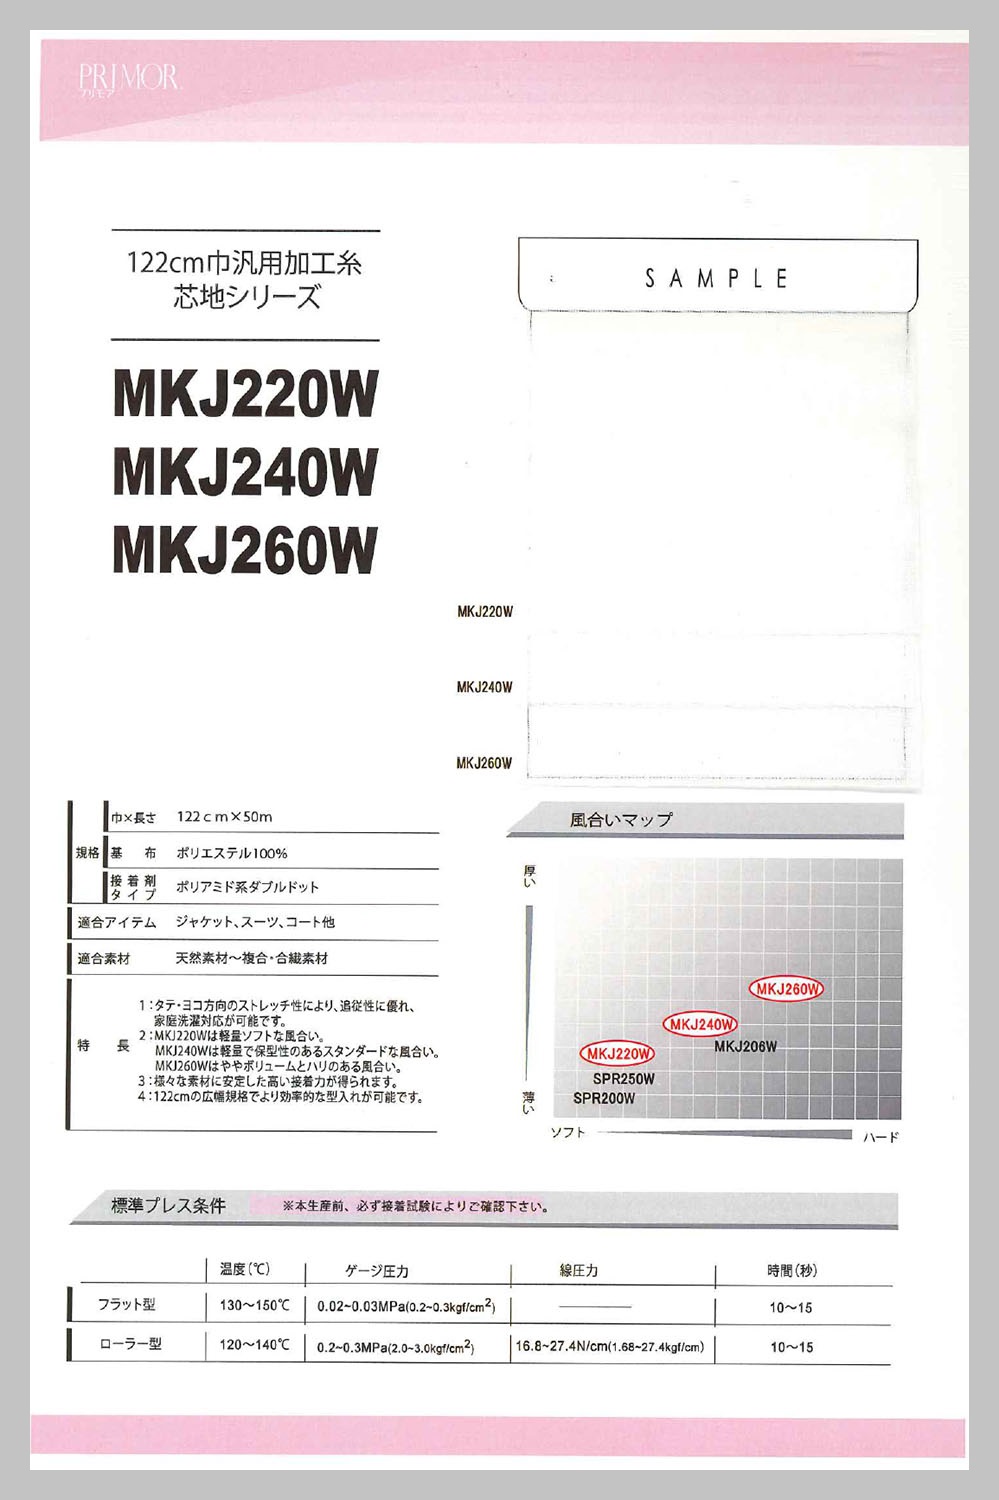 MKJ240W ジャケット・コート用汎用加工糸芯地日中グローバル展開シリーズ